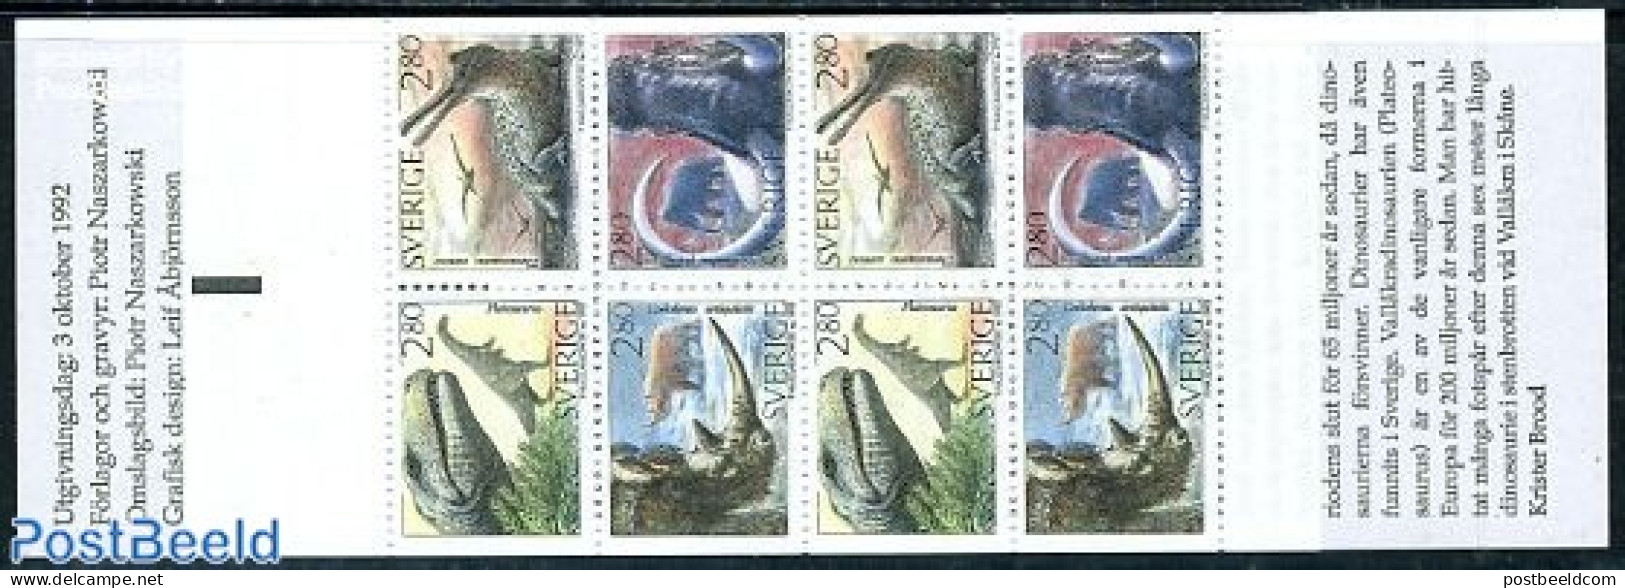 Sweden 1992 Prehistoric Animals Booklet, Mint NH, Nature - Prehistoric Animals - Stamp Booklets - Unused Stamps